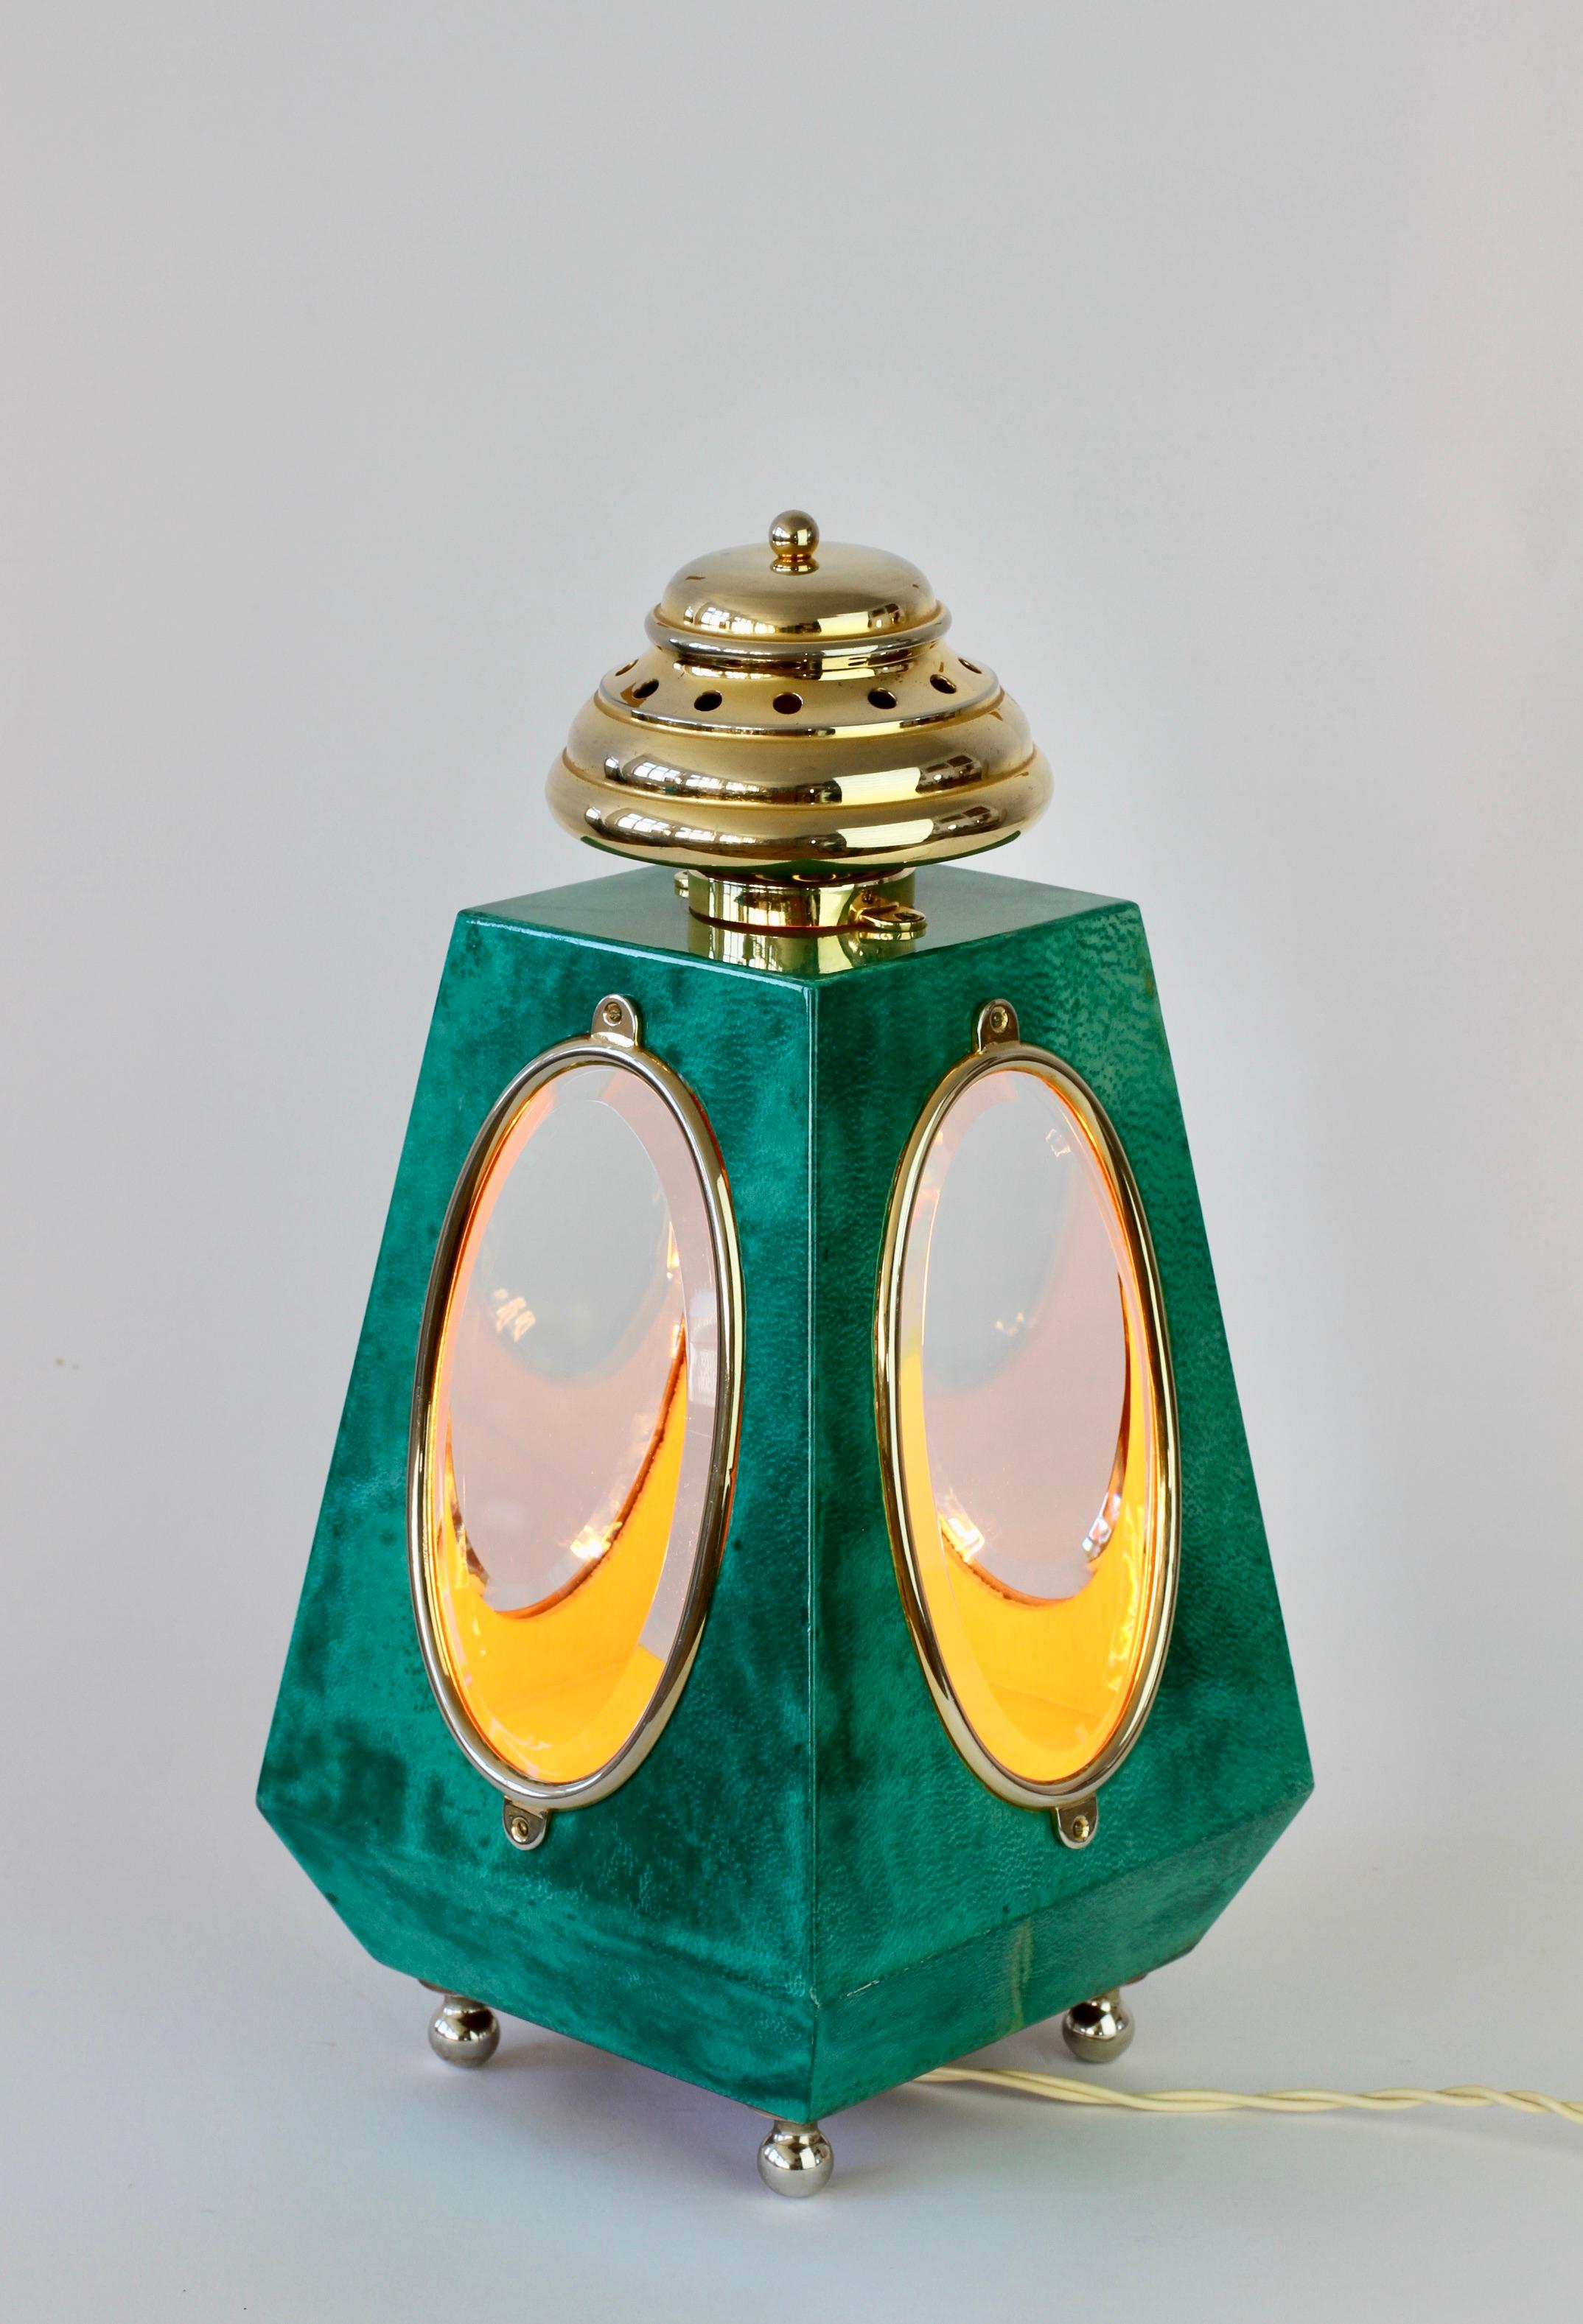 Cast Aldo Tura 1960s Midcentury Table Lamp / Lantern in Green Italian Goatskin